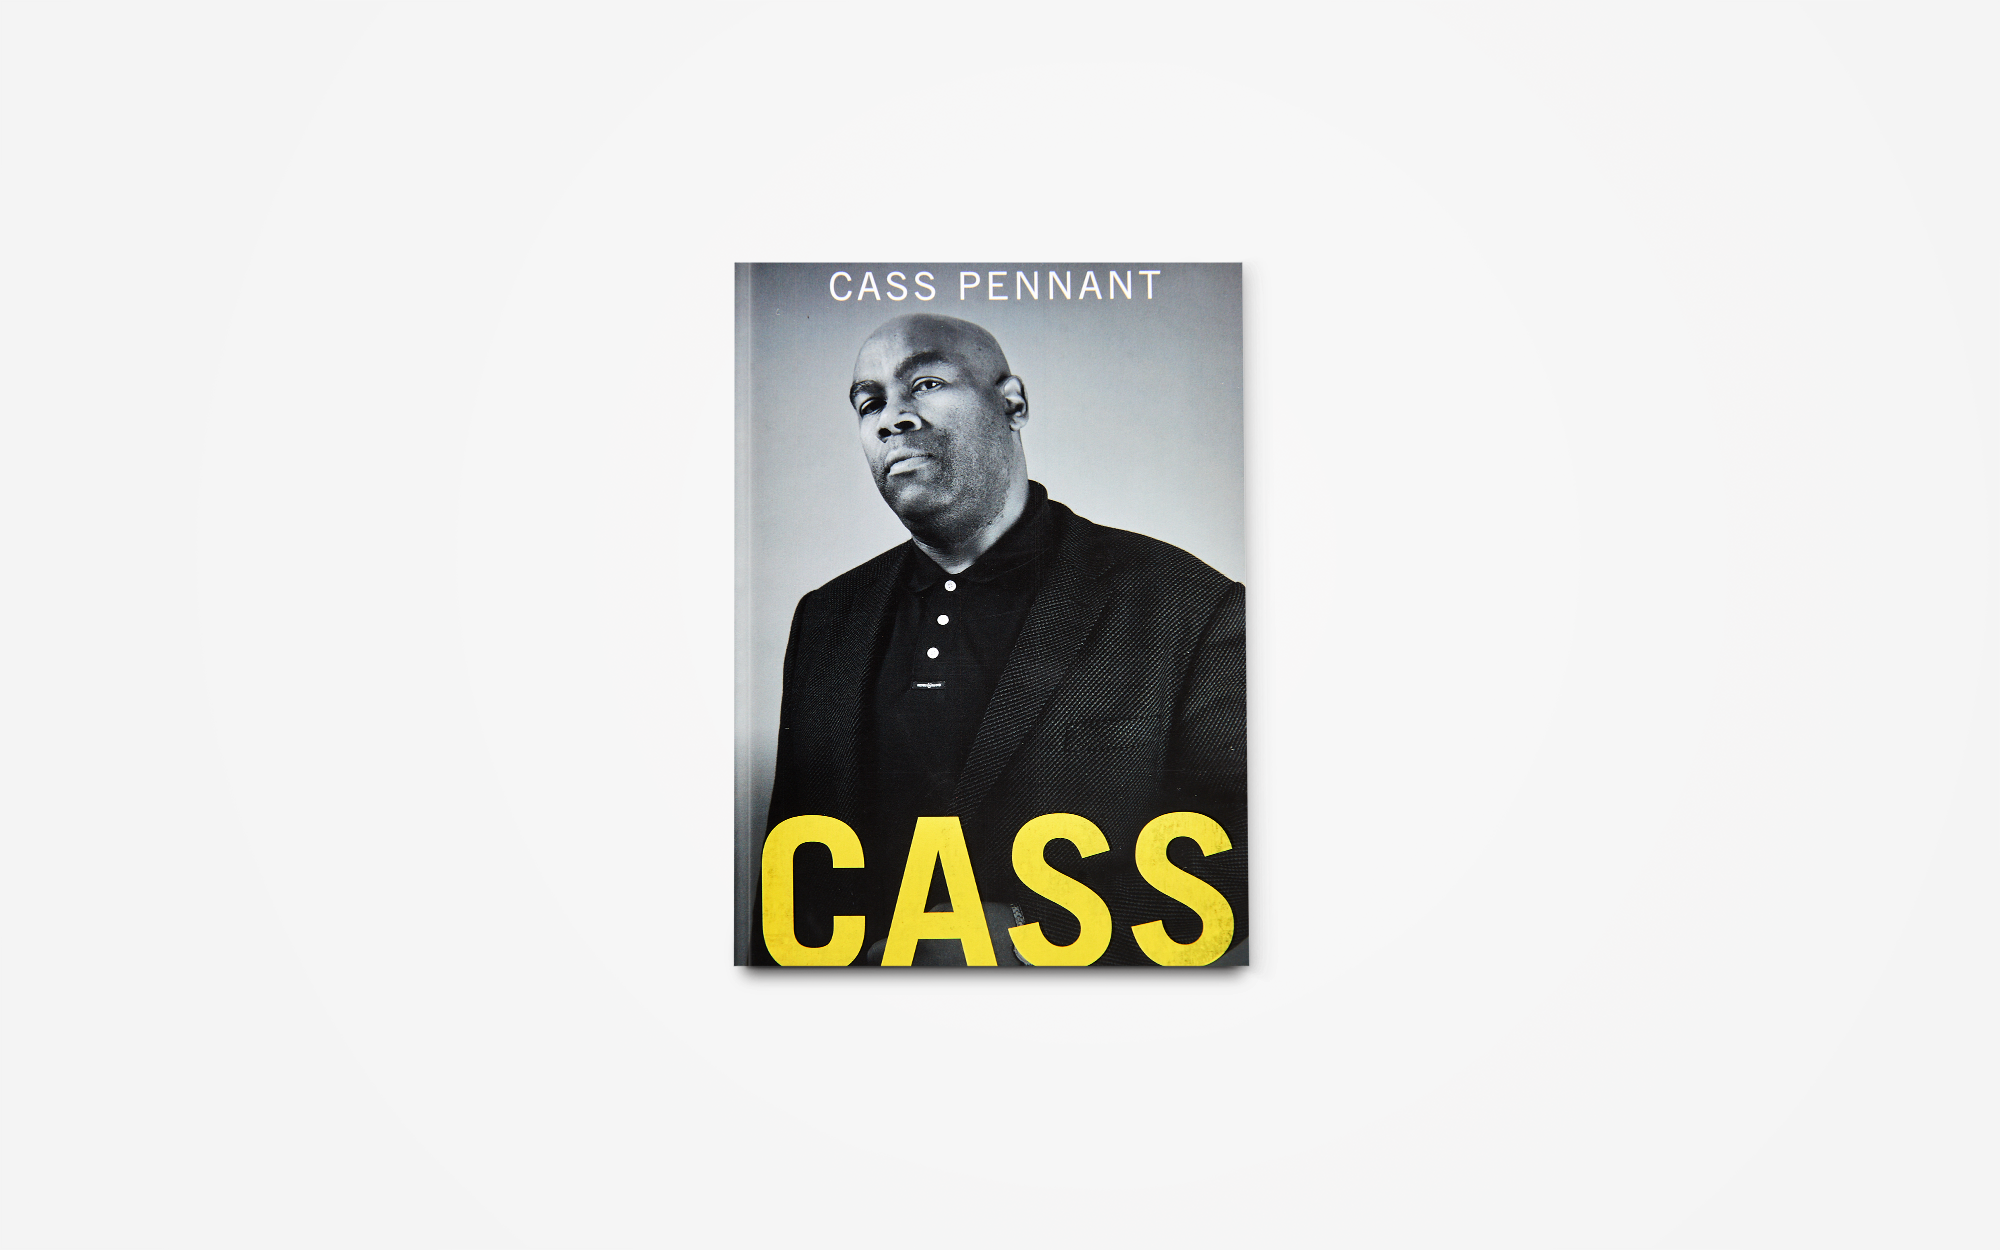 Cass Pennant portrait